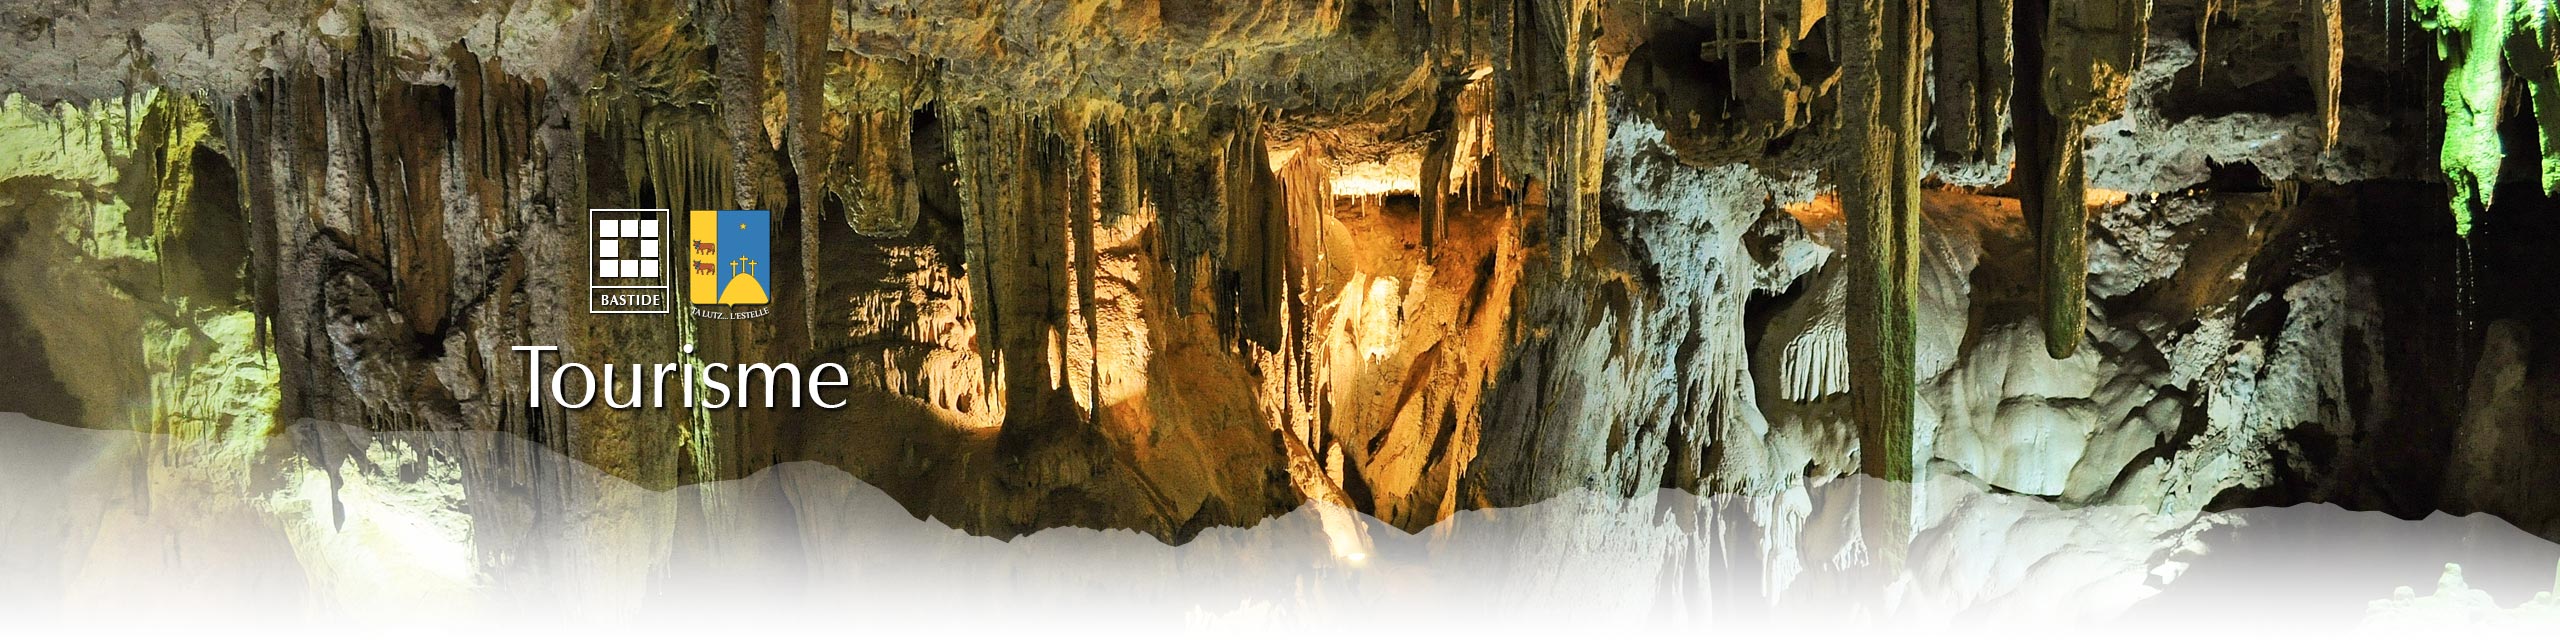 bandeau-lestelle-grottes-11.jpg